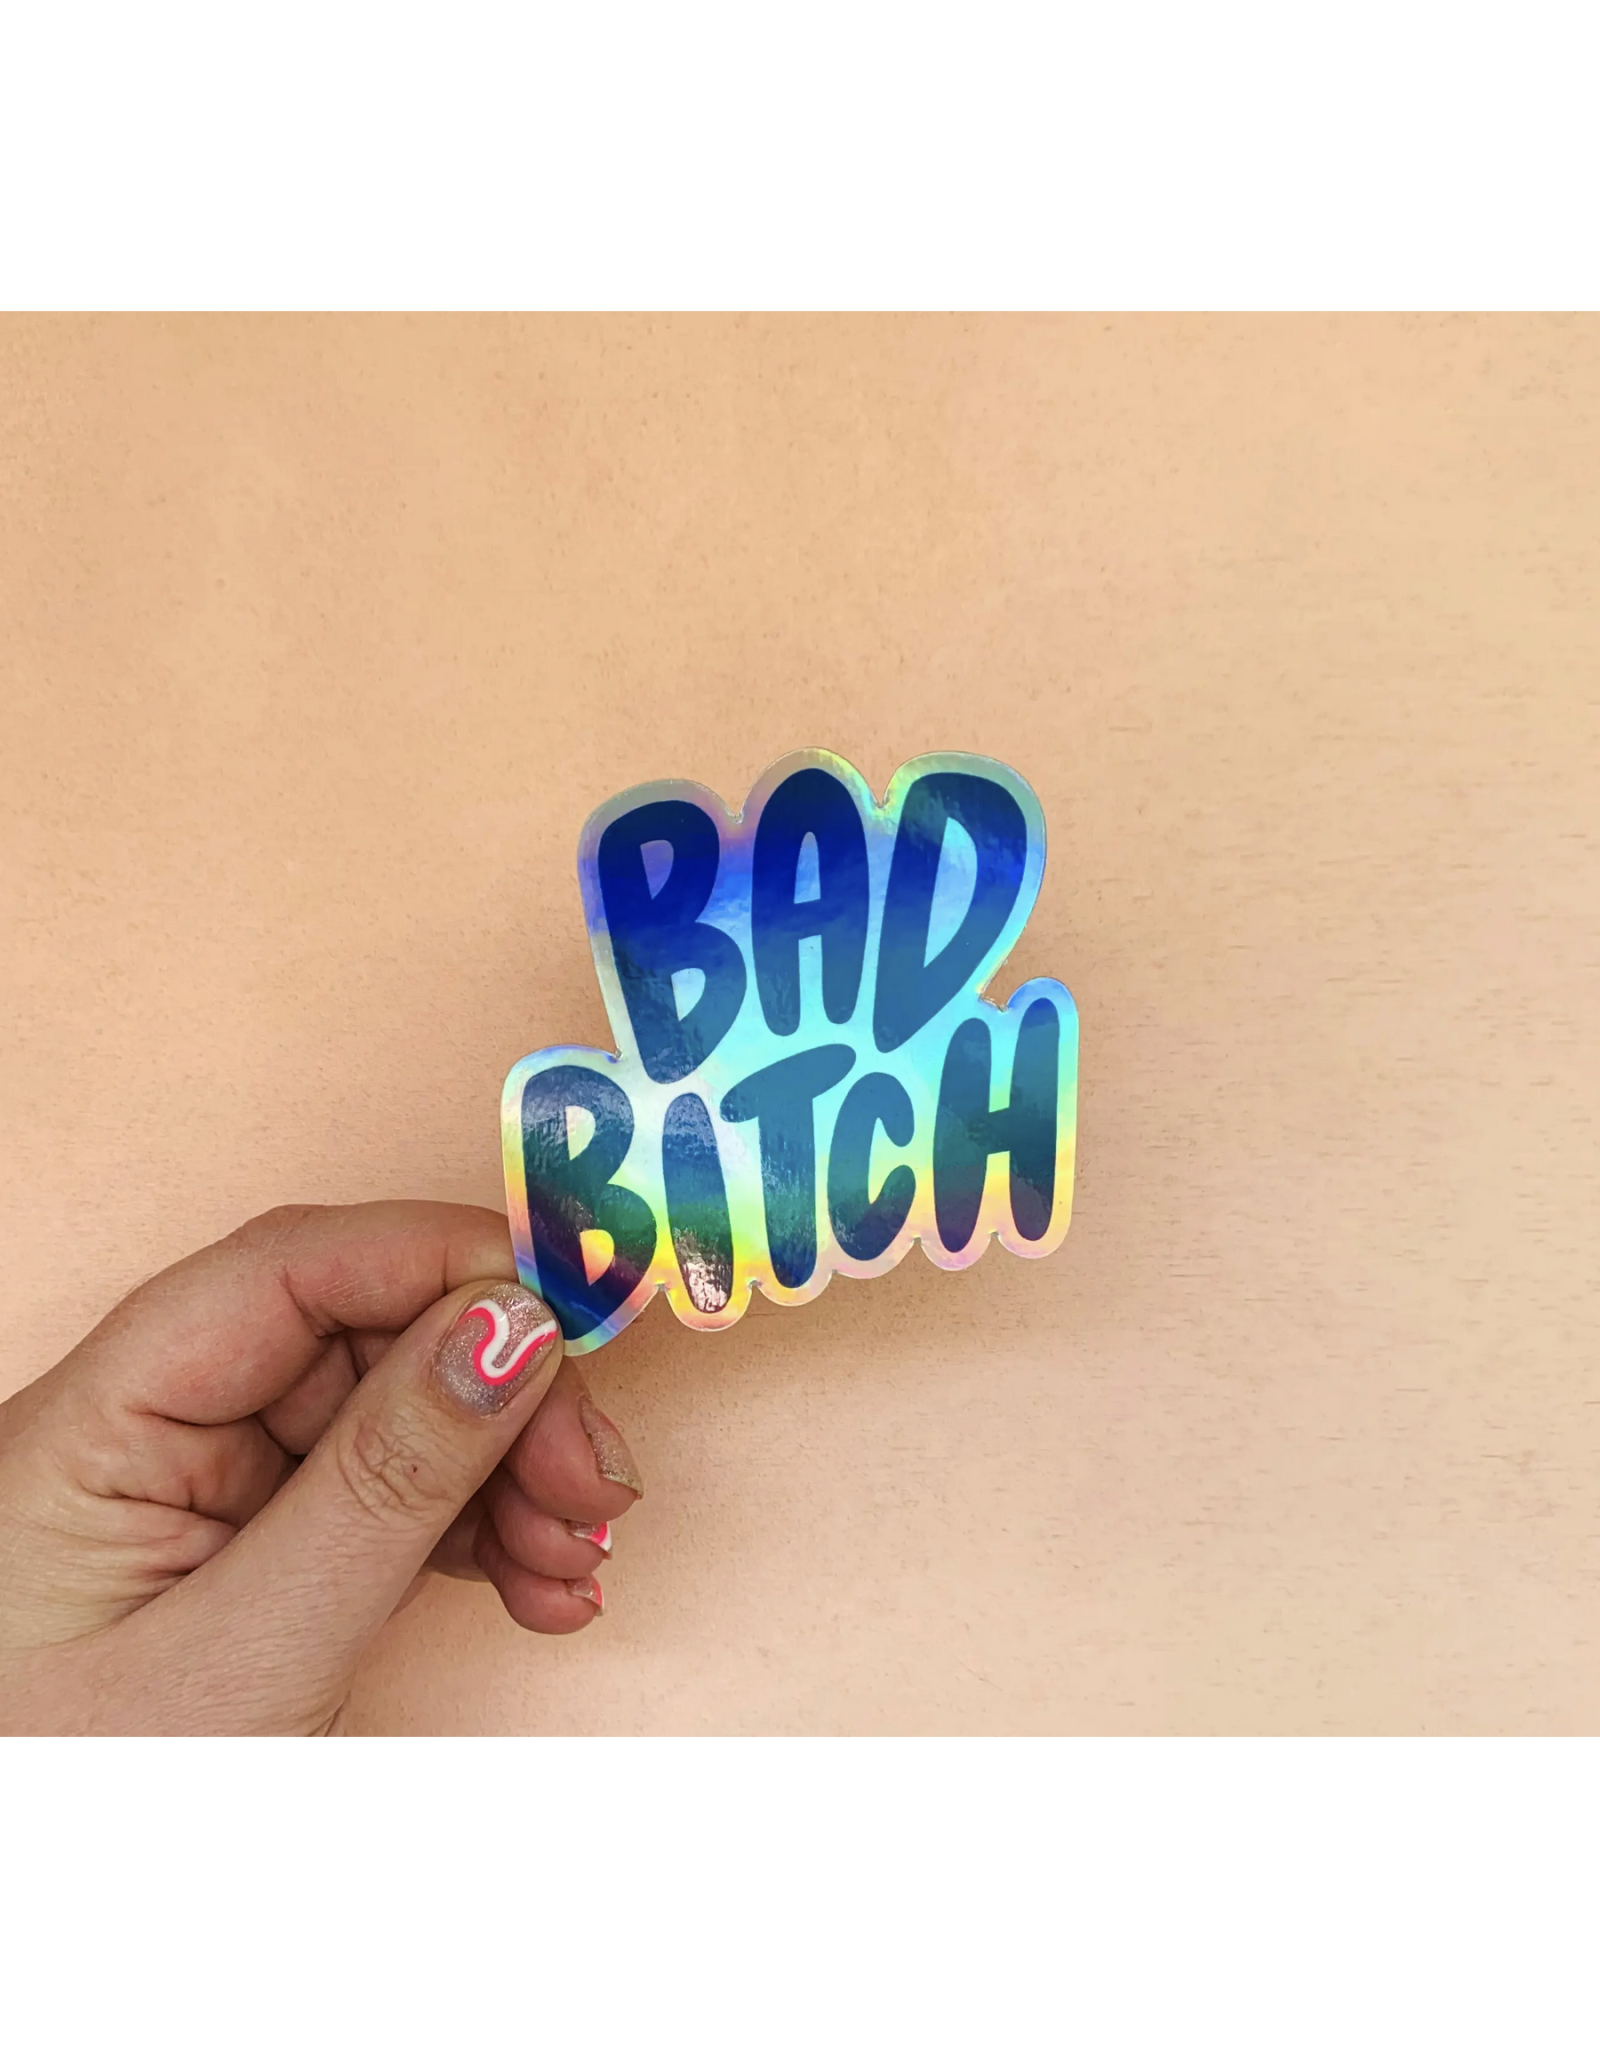 Bad Bitch Sticker